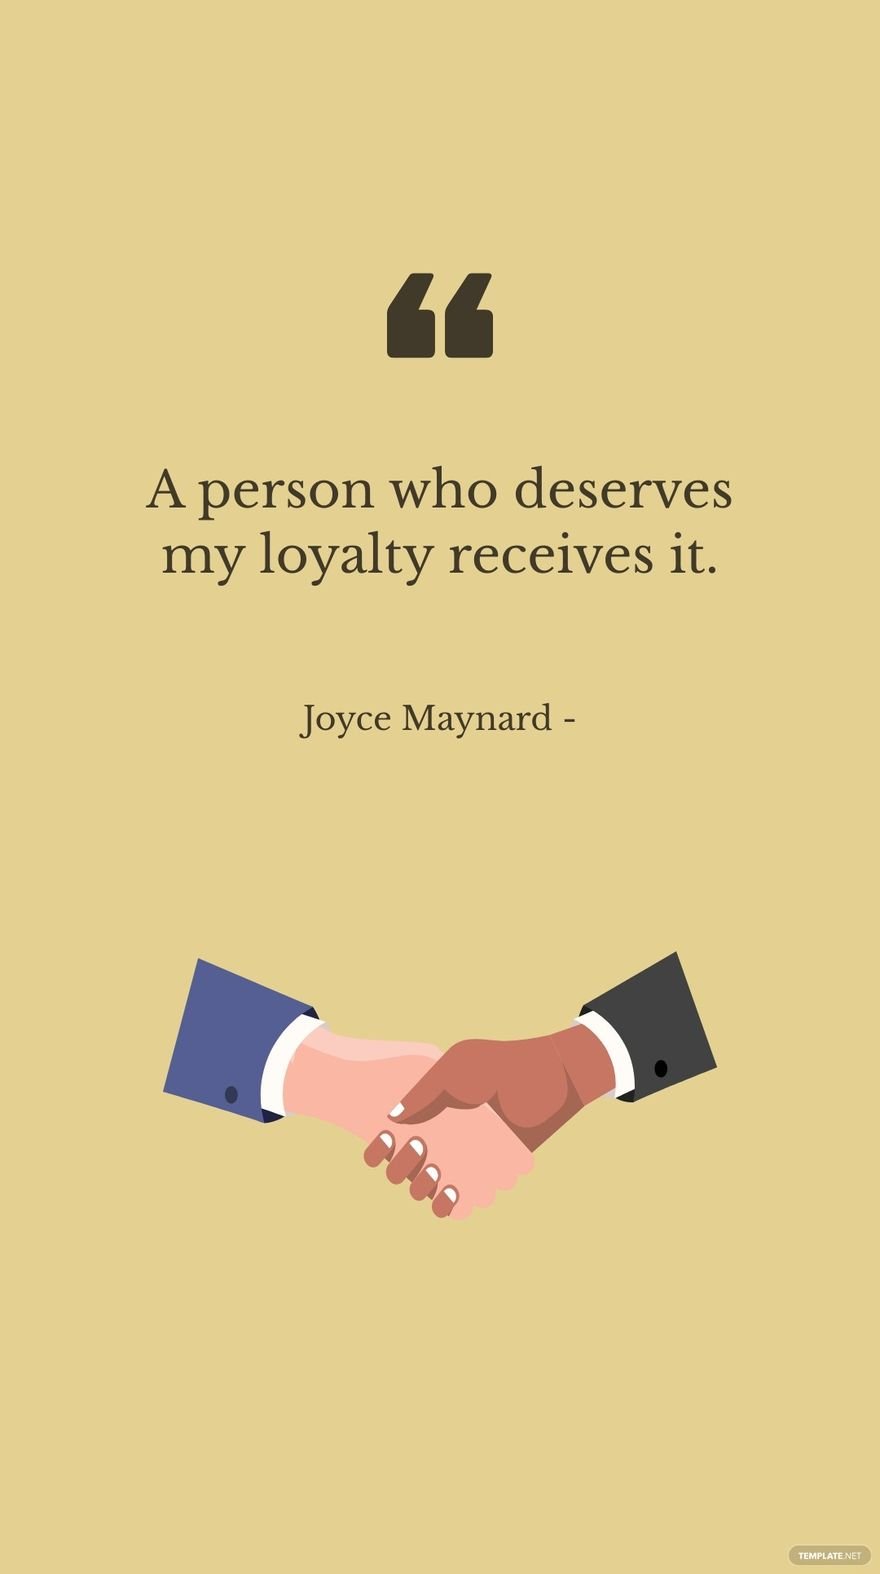 Free Joyce Maynard - A person who deserves my loyalty receives it. in JPG